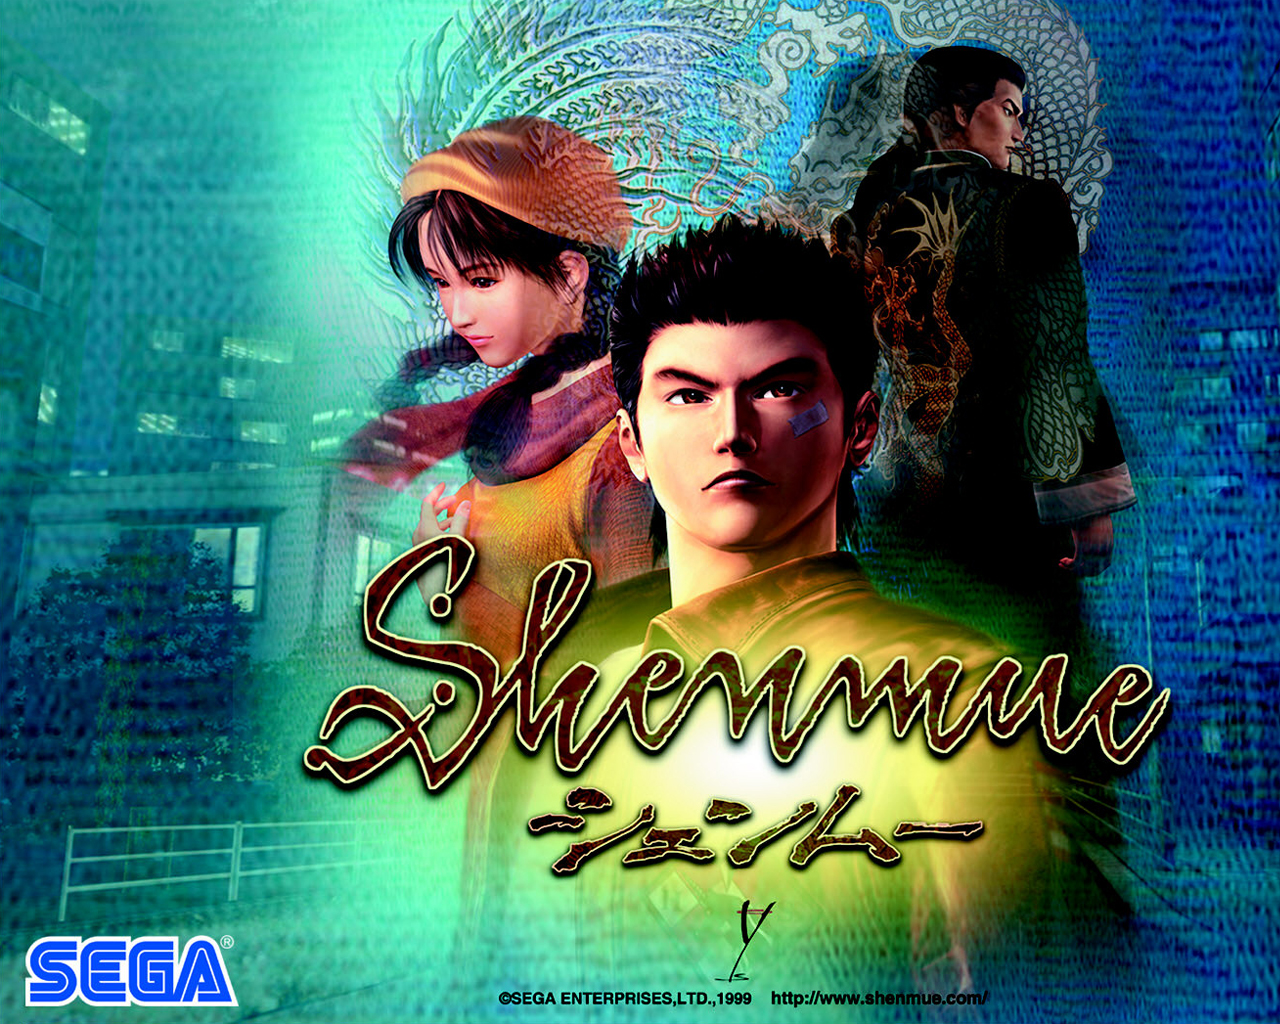 Sega Europe Registers Shenmue Hd Domain Vgleaks 2 0